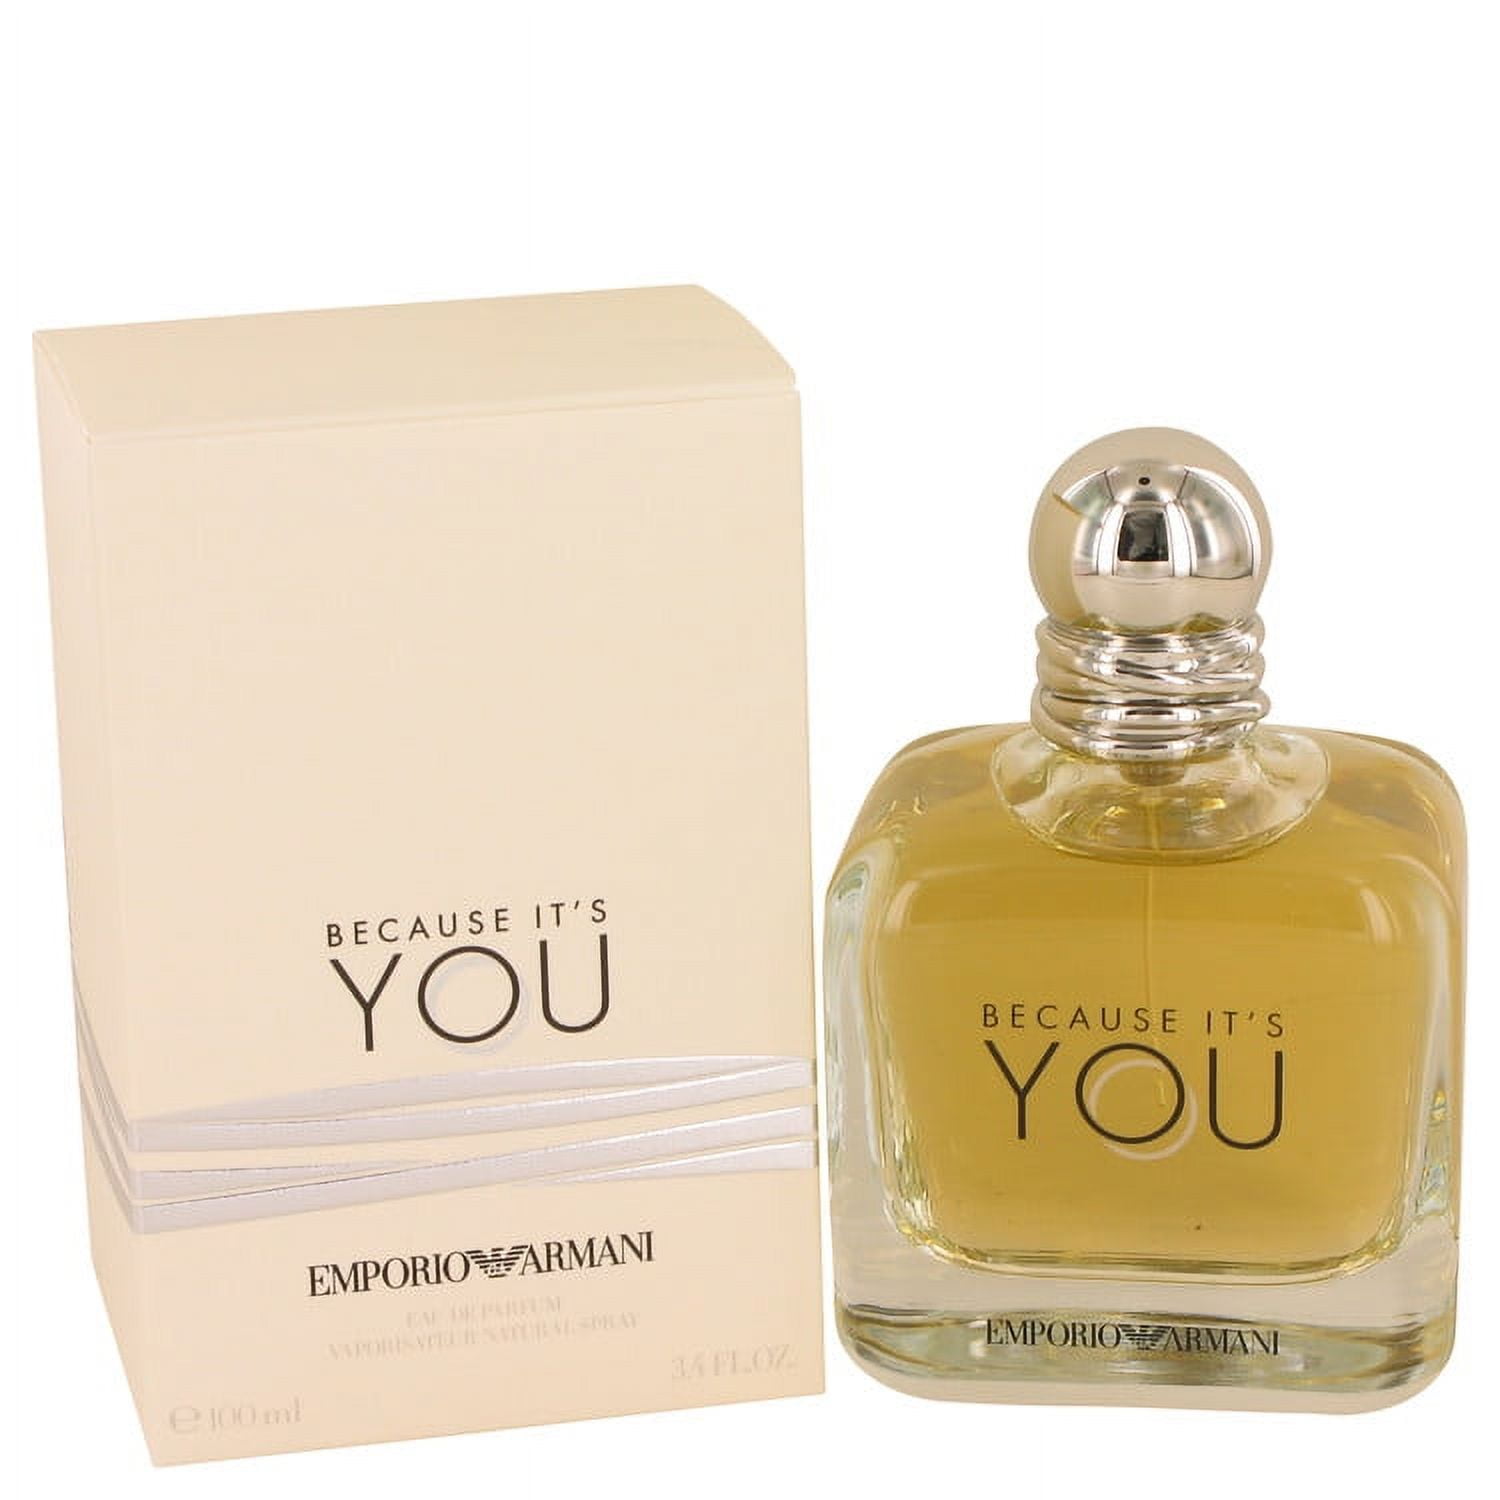 Because It's You by Emporio Armani Eau de Parfum Spray 3.4 oz